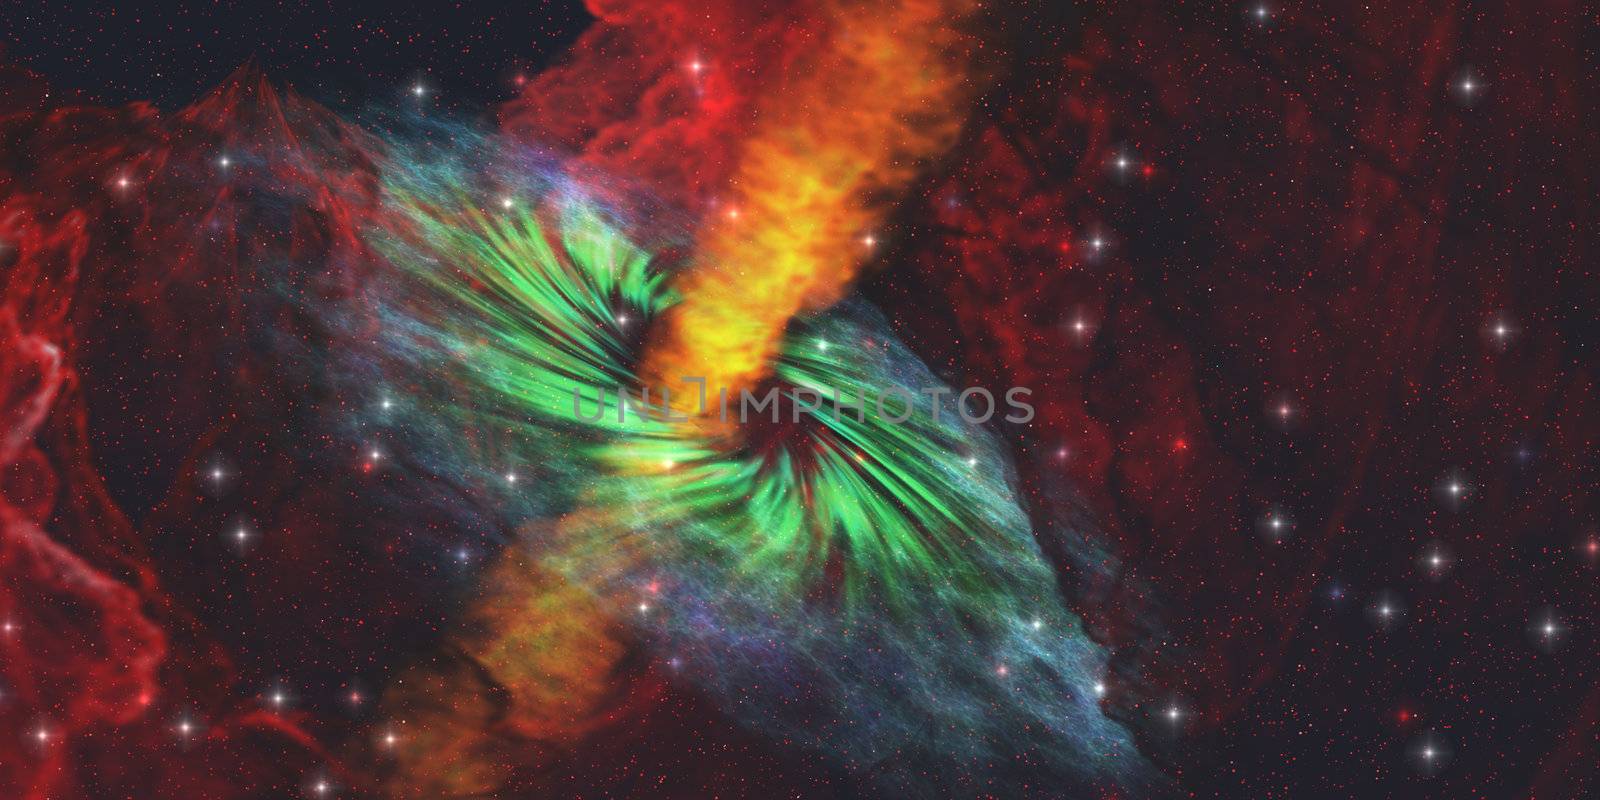 Black Hole in Cosmos by Catmando